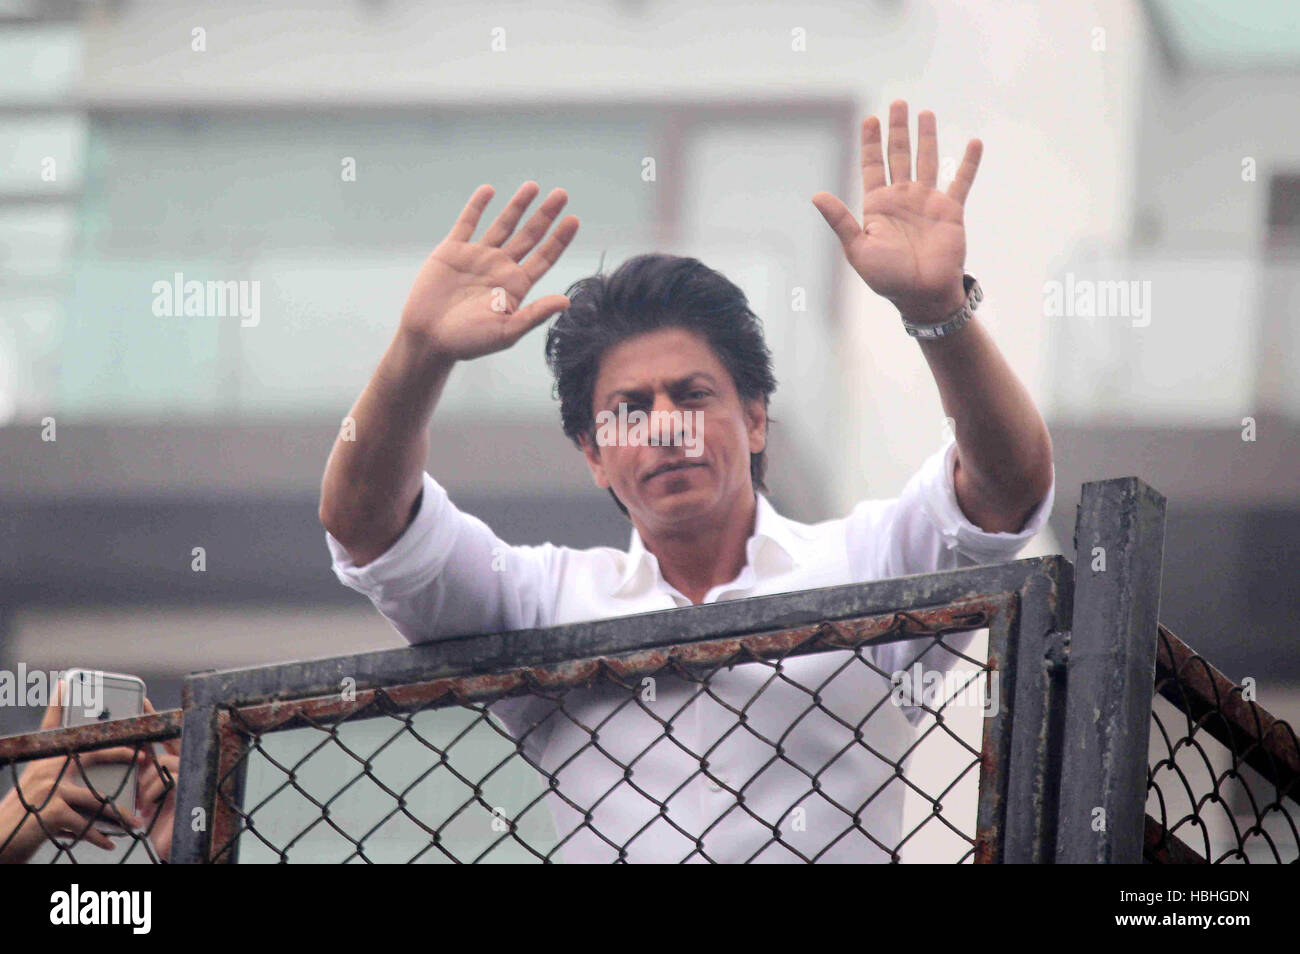 Shahrukh Khan waving his hands, Indian Bollywood actor on Eid al Fitr festival at his residence Mannat balcony in Mumbai, India Stock Photo